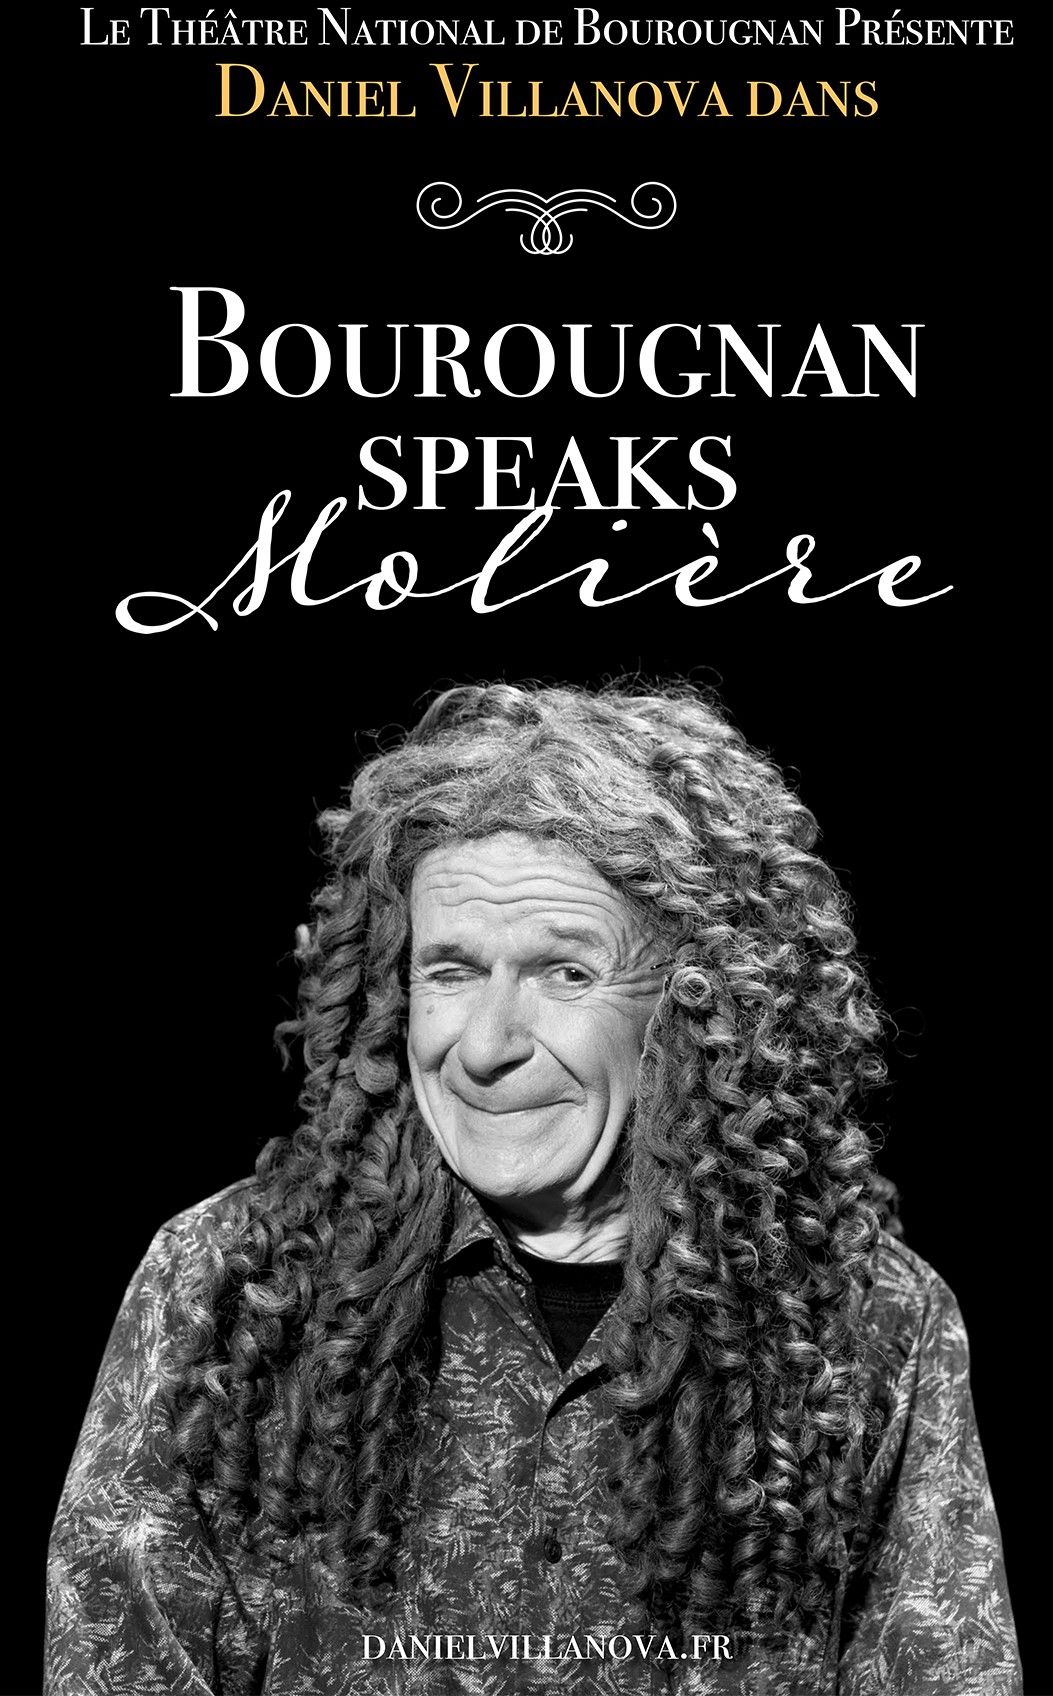 Daniel Villanova - Bourougnan Speaks Molière